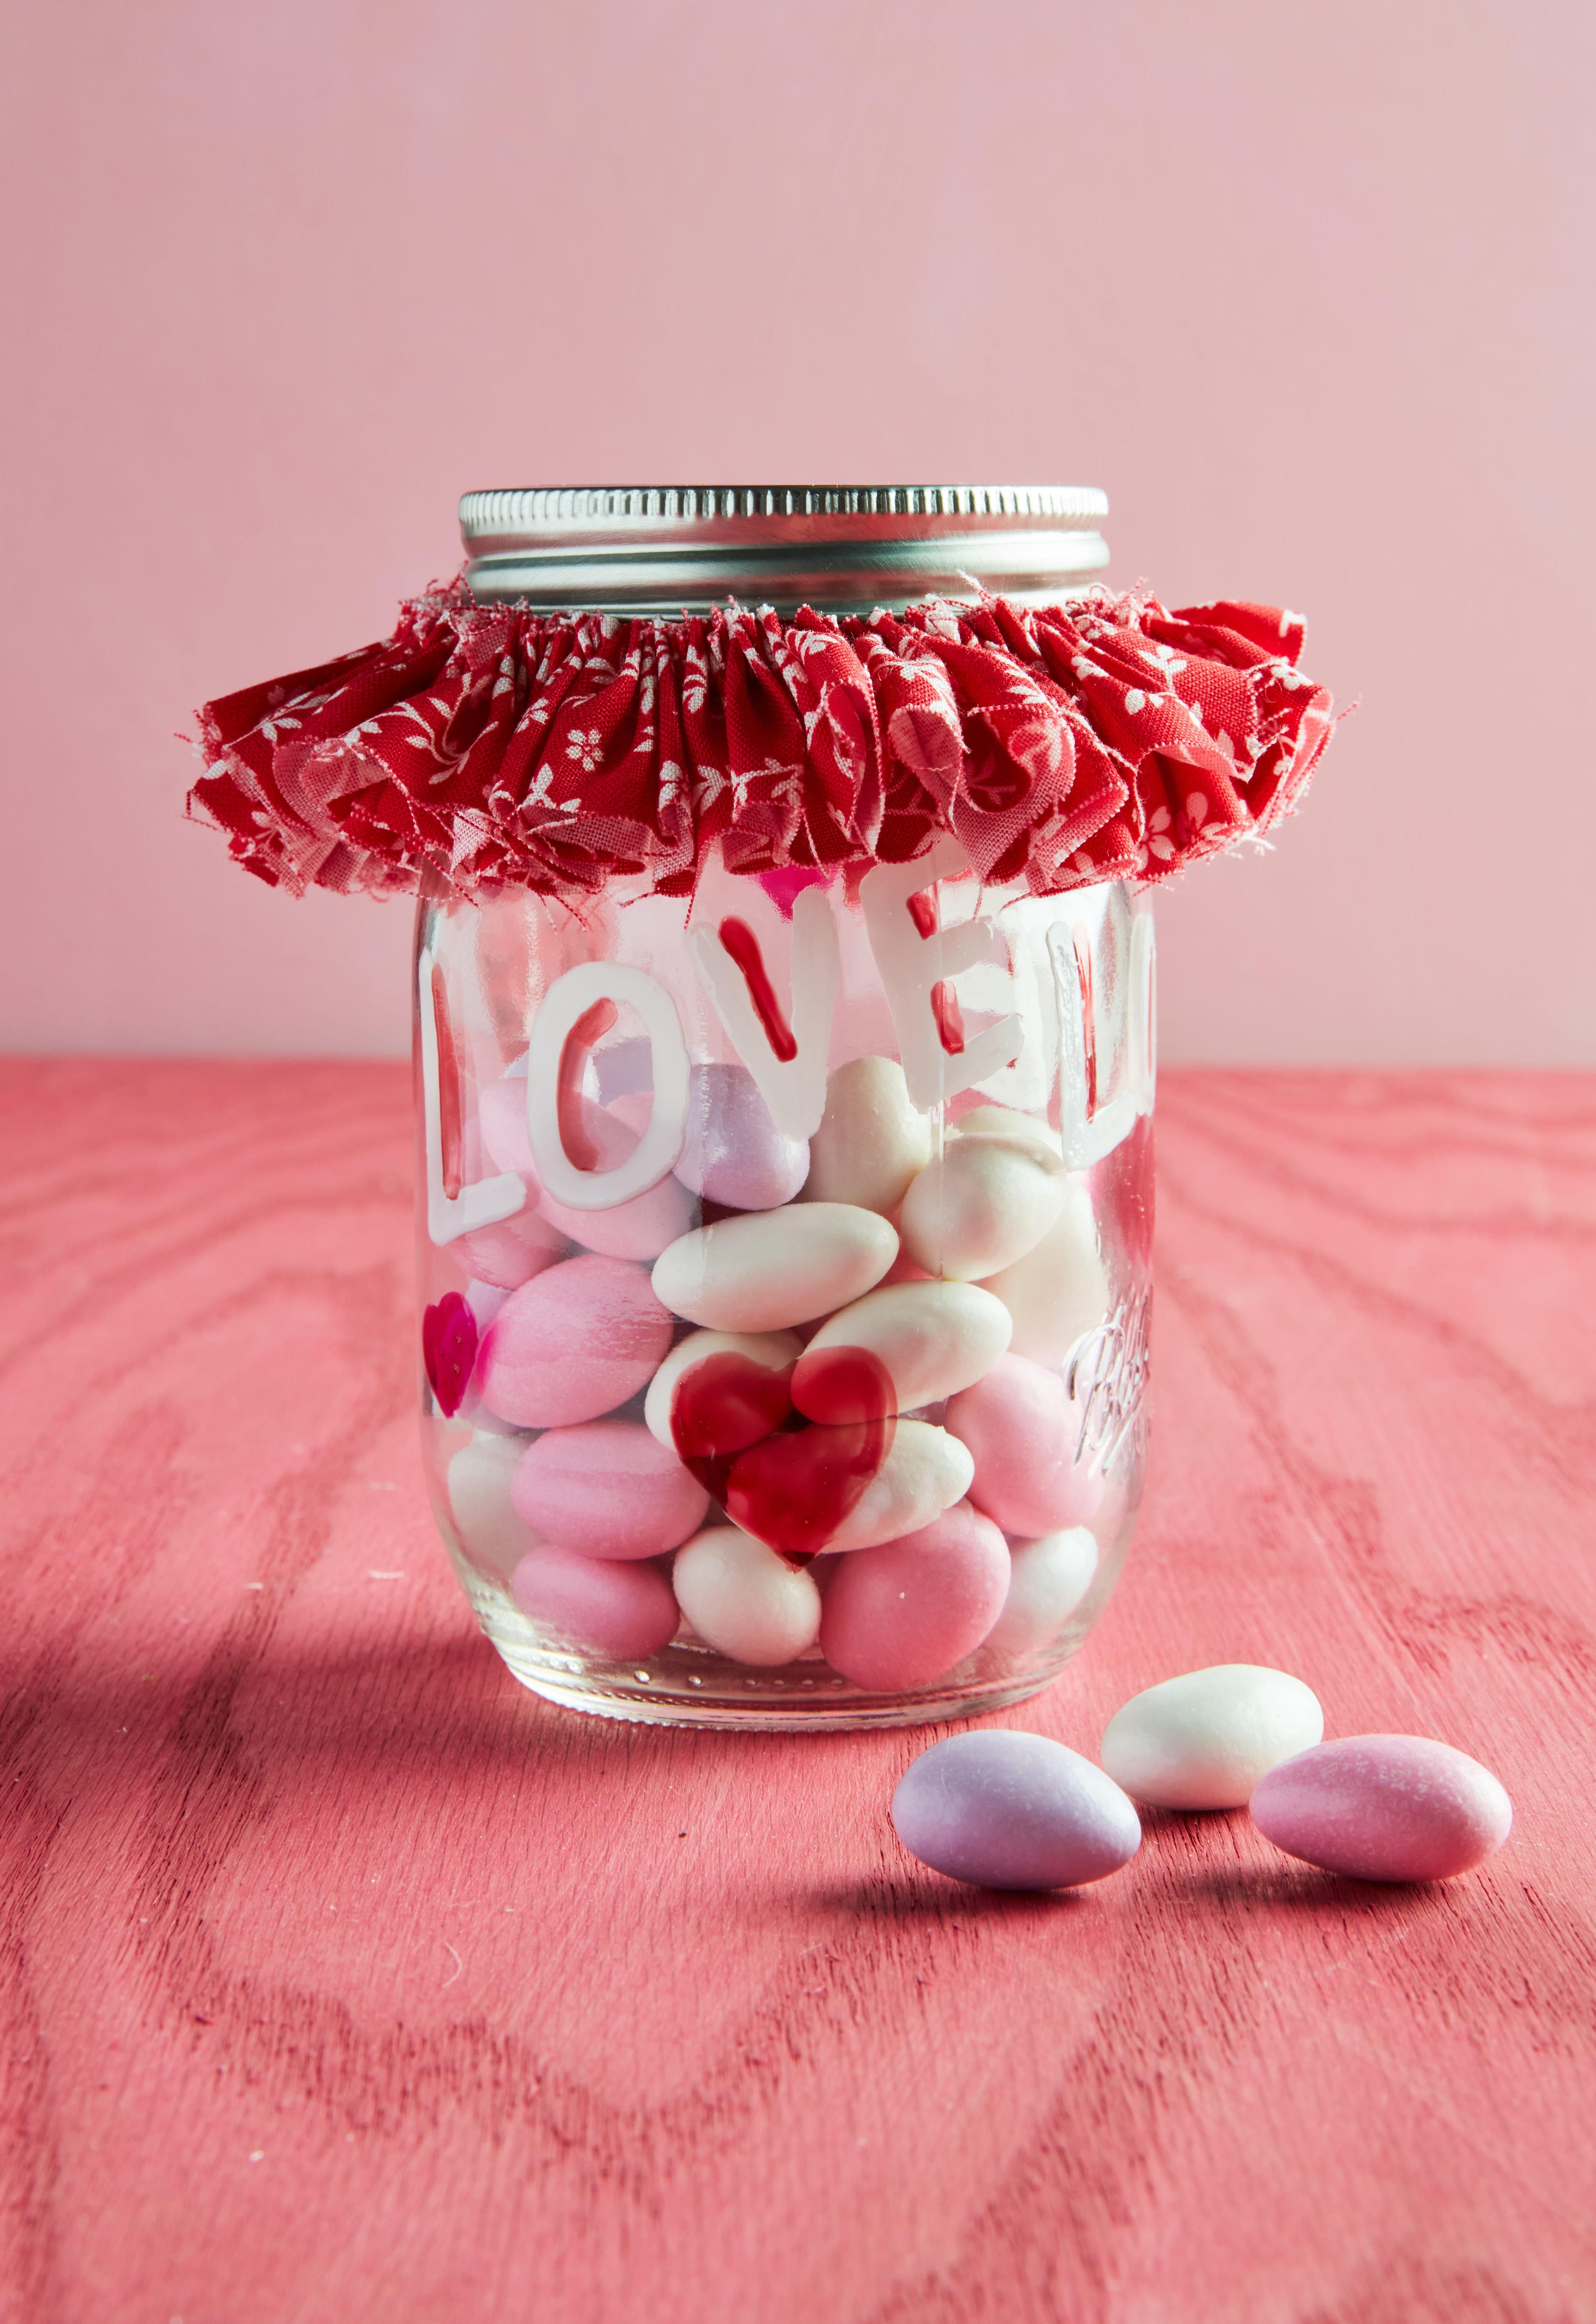 Cute Love Heart Sweets in Glass Heart Jar **FREE LED Lights Birthday Gift 